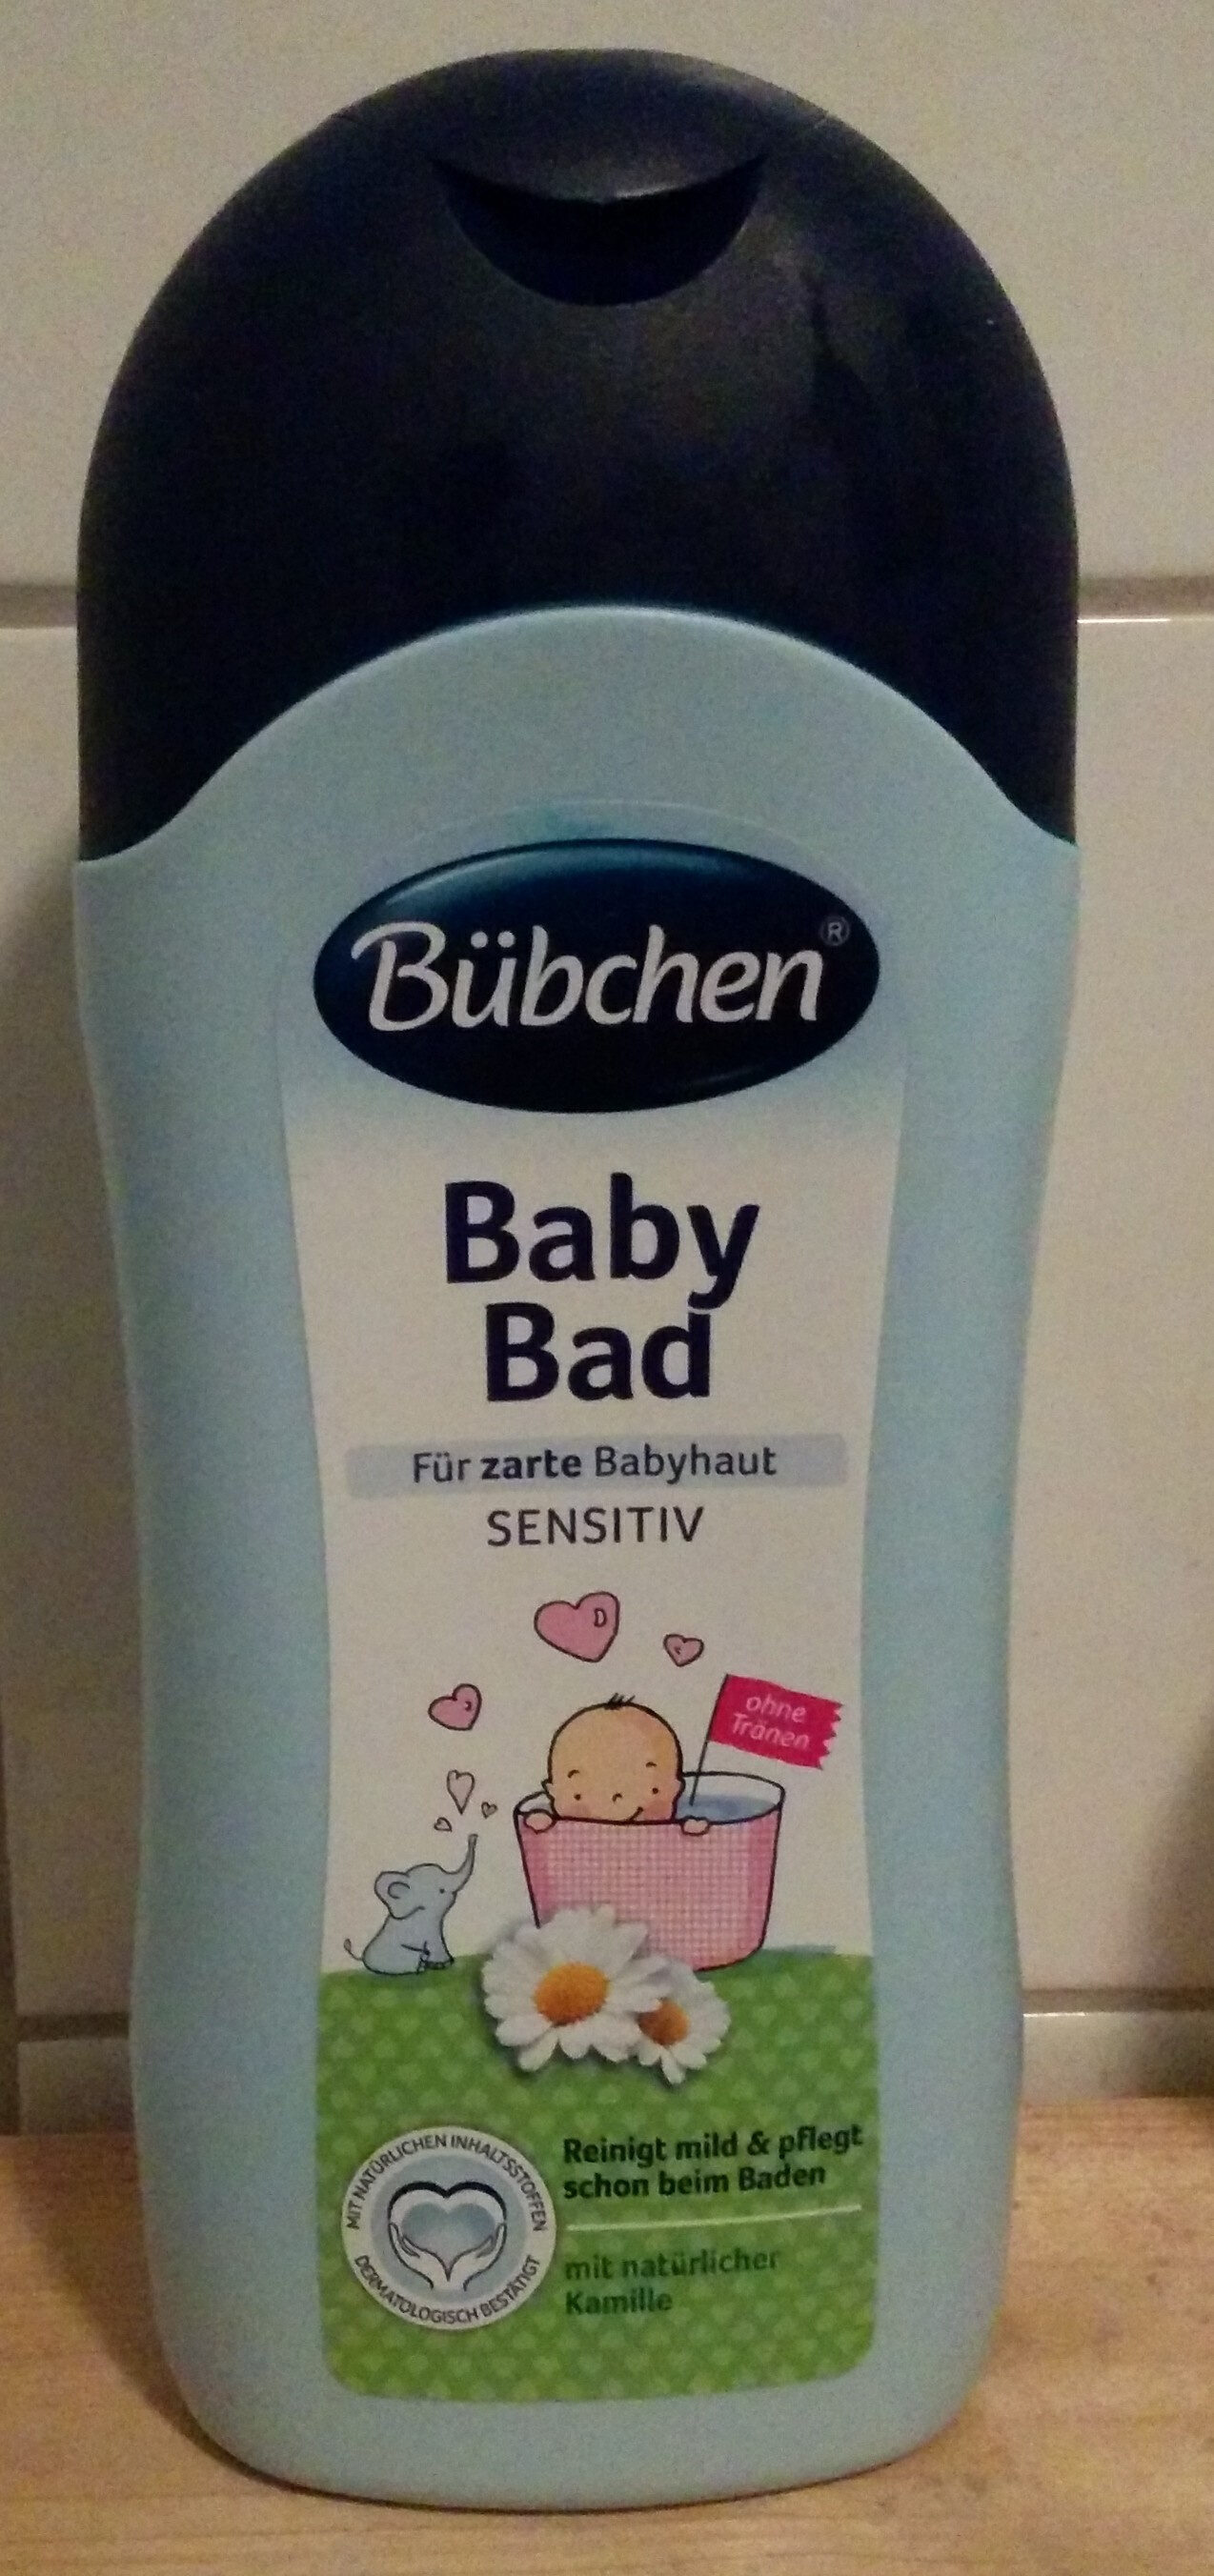 Baby Bad Sensitiv - Product - de